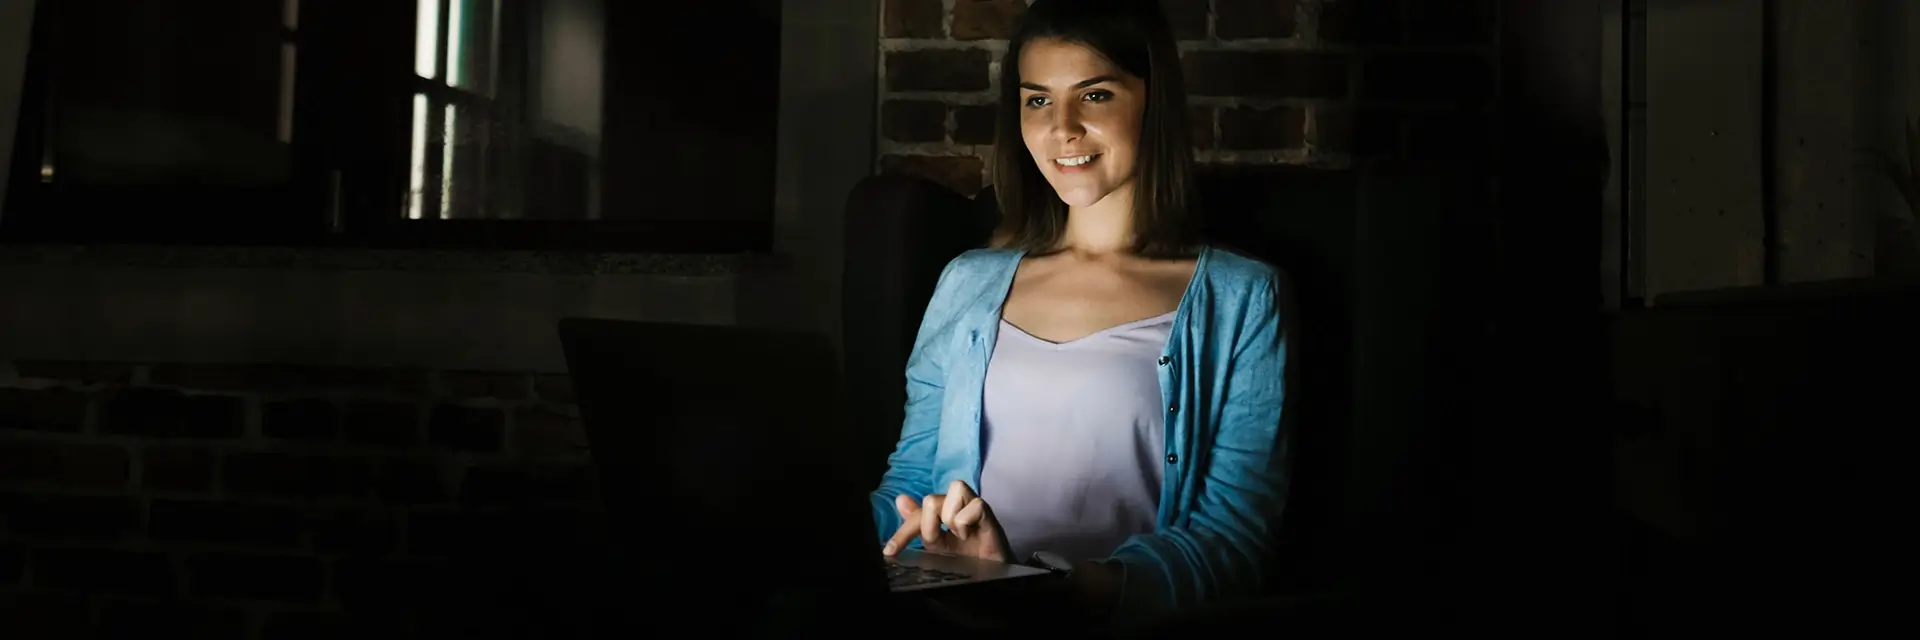 Woman smiling while using laptop